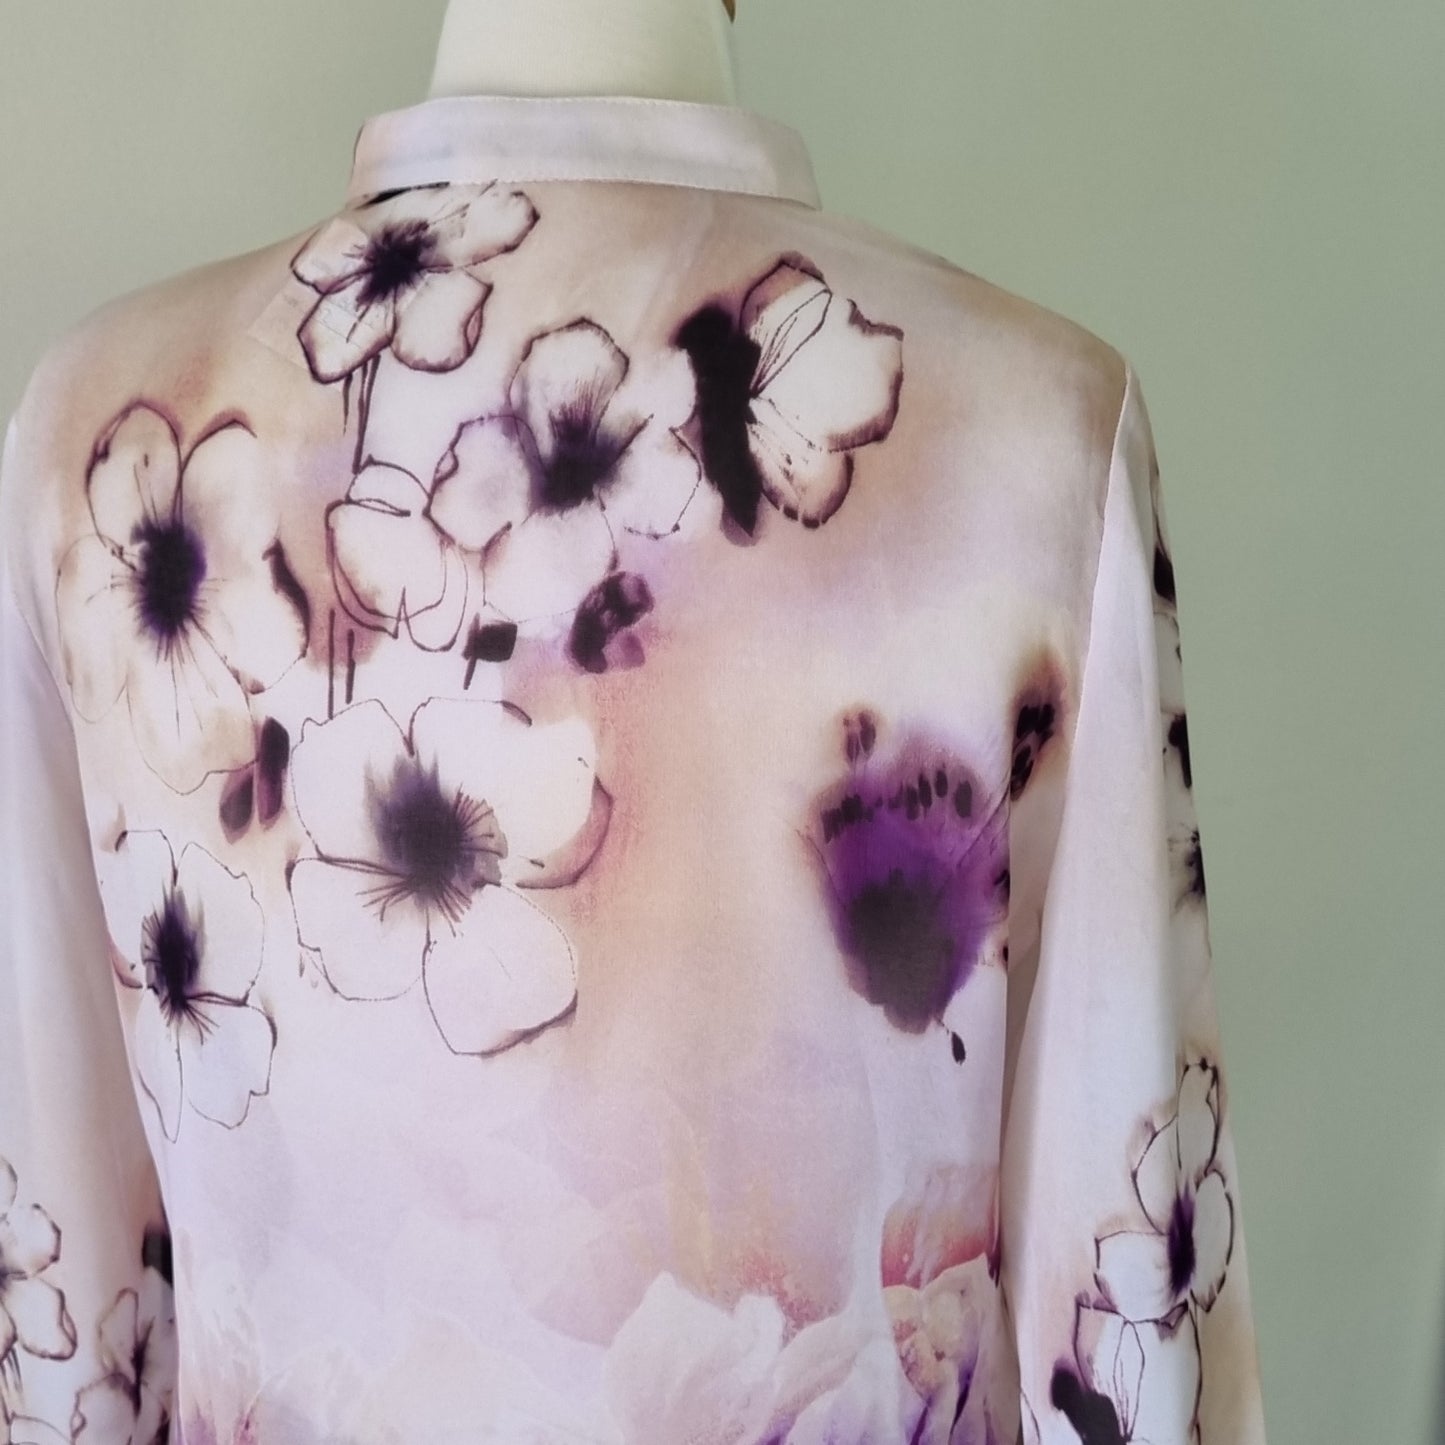 House of Envy - Beige & Purple front zip long sleeve blouse